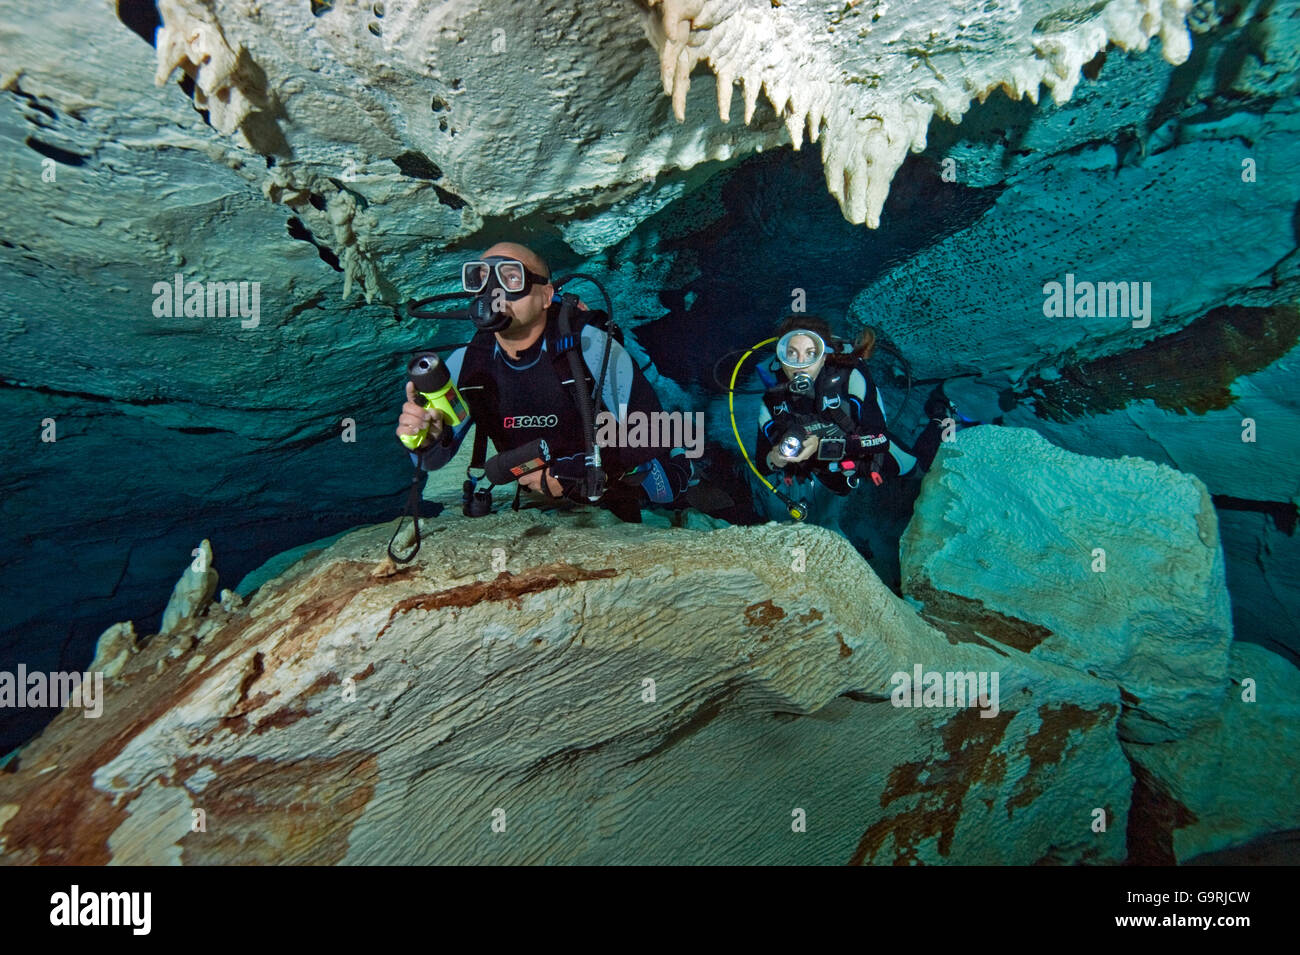 Taucher in Süßwasser-Höhle, Cenote, Macao Höhle, Punta Cana, Dominikanische Republik, Karibik, Amerika Stockfoto